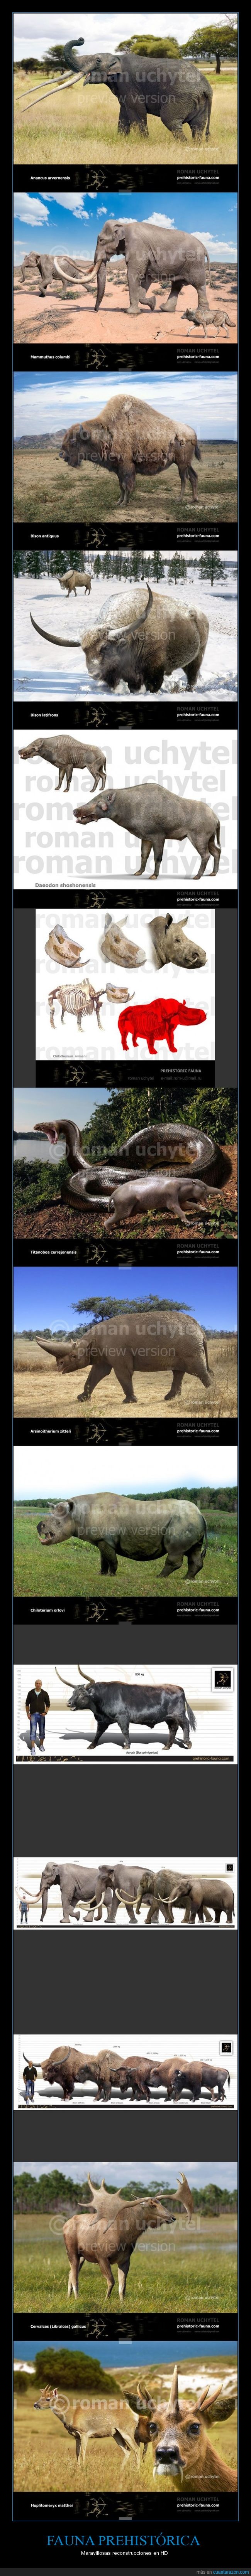 Fauna,Animal,Prehistoria,Prehistorica,Primitiva,Ciervo,Elefante,Toro,Vaca